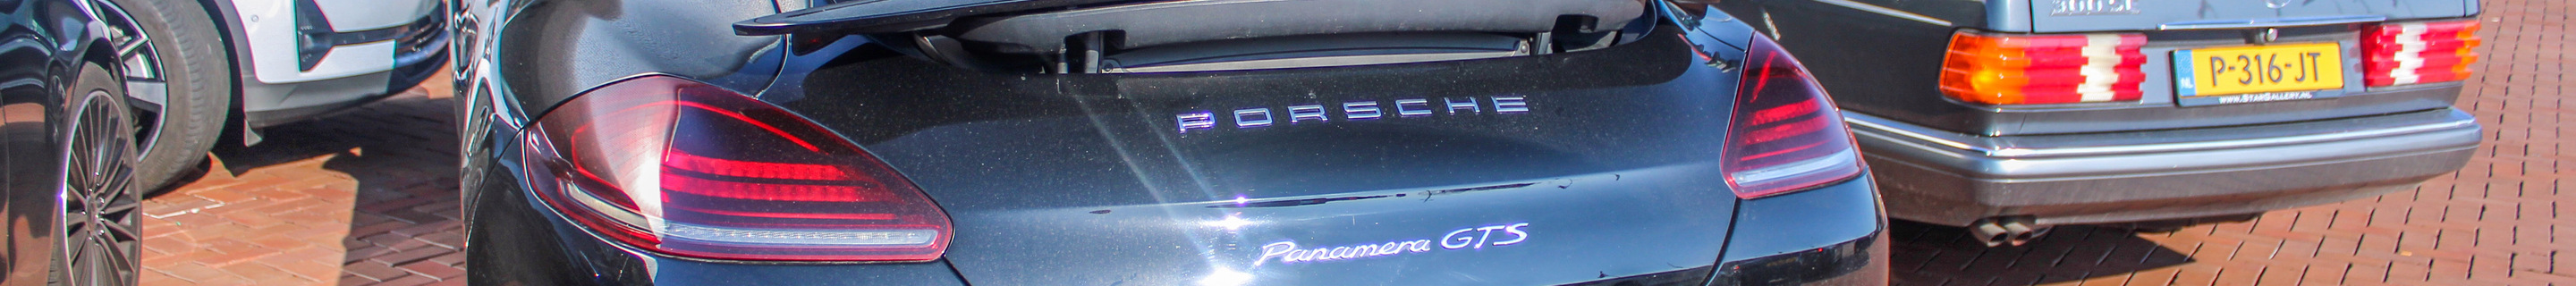 Porsche 970 Panamera GTS MkII